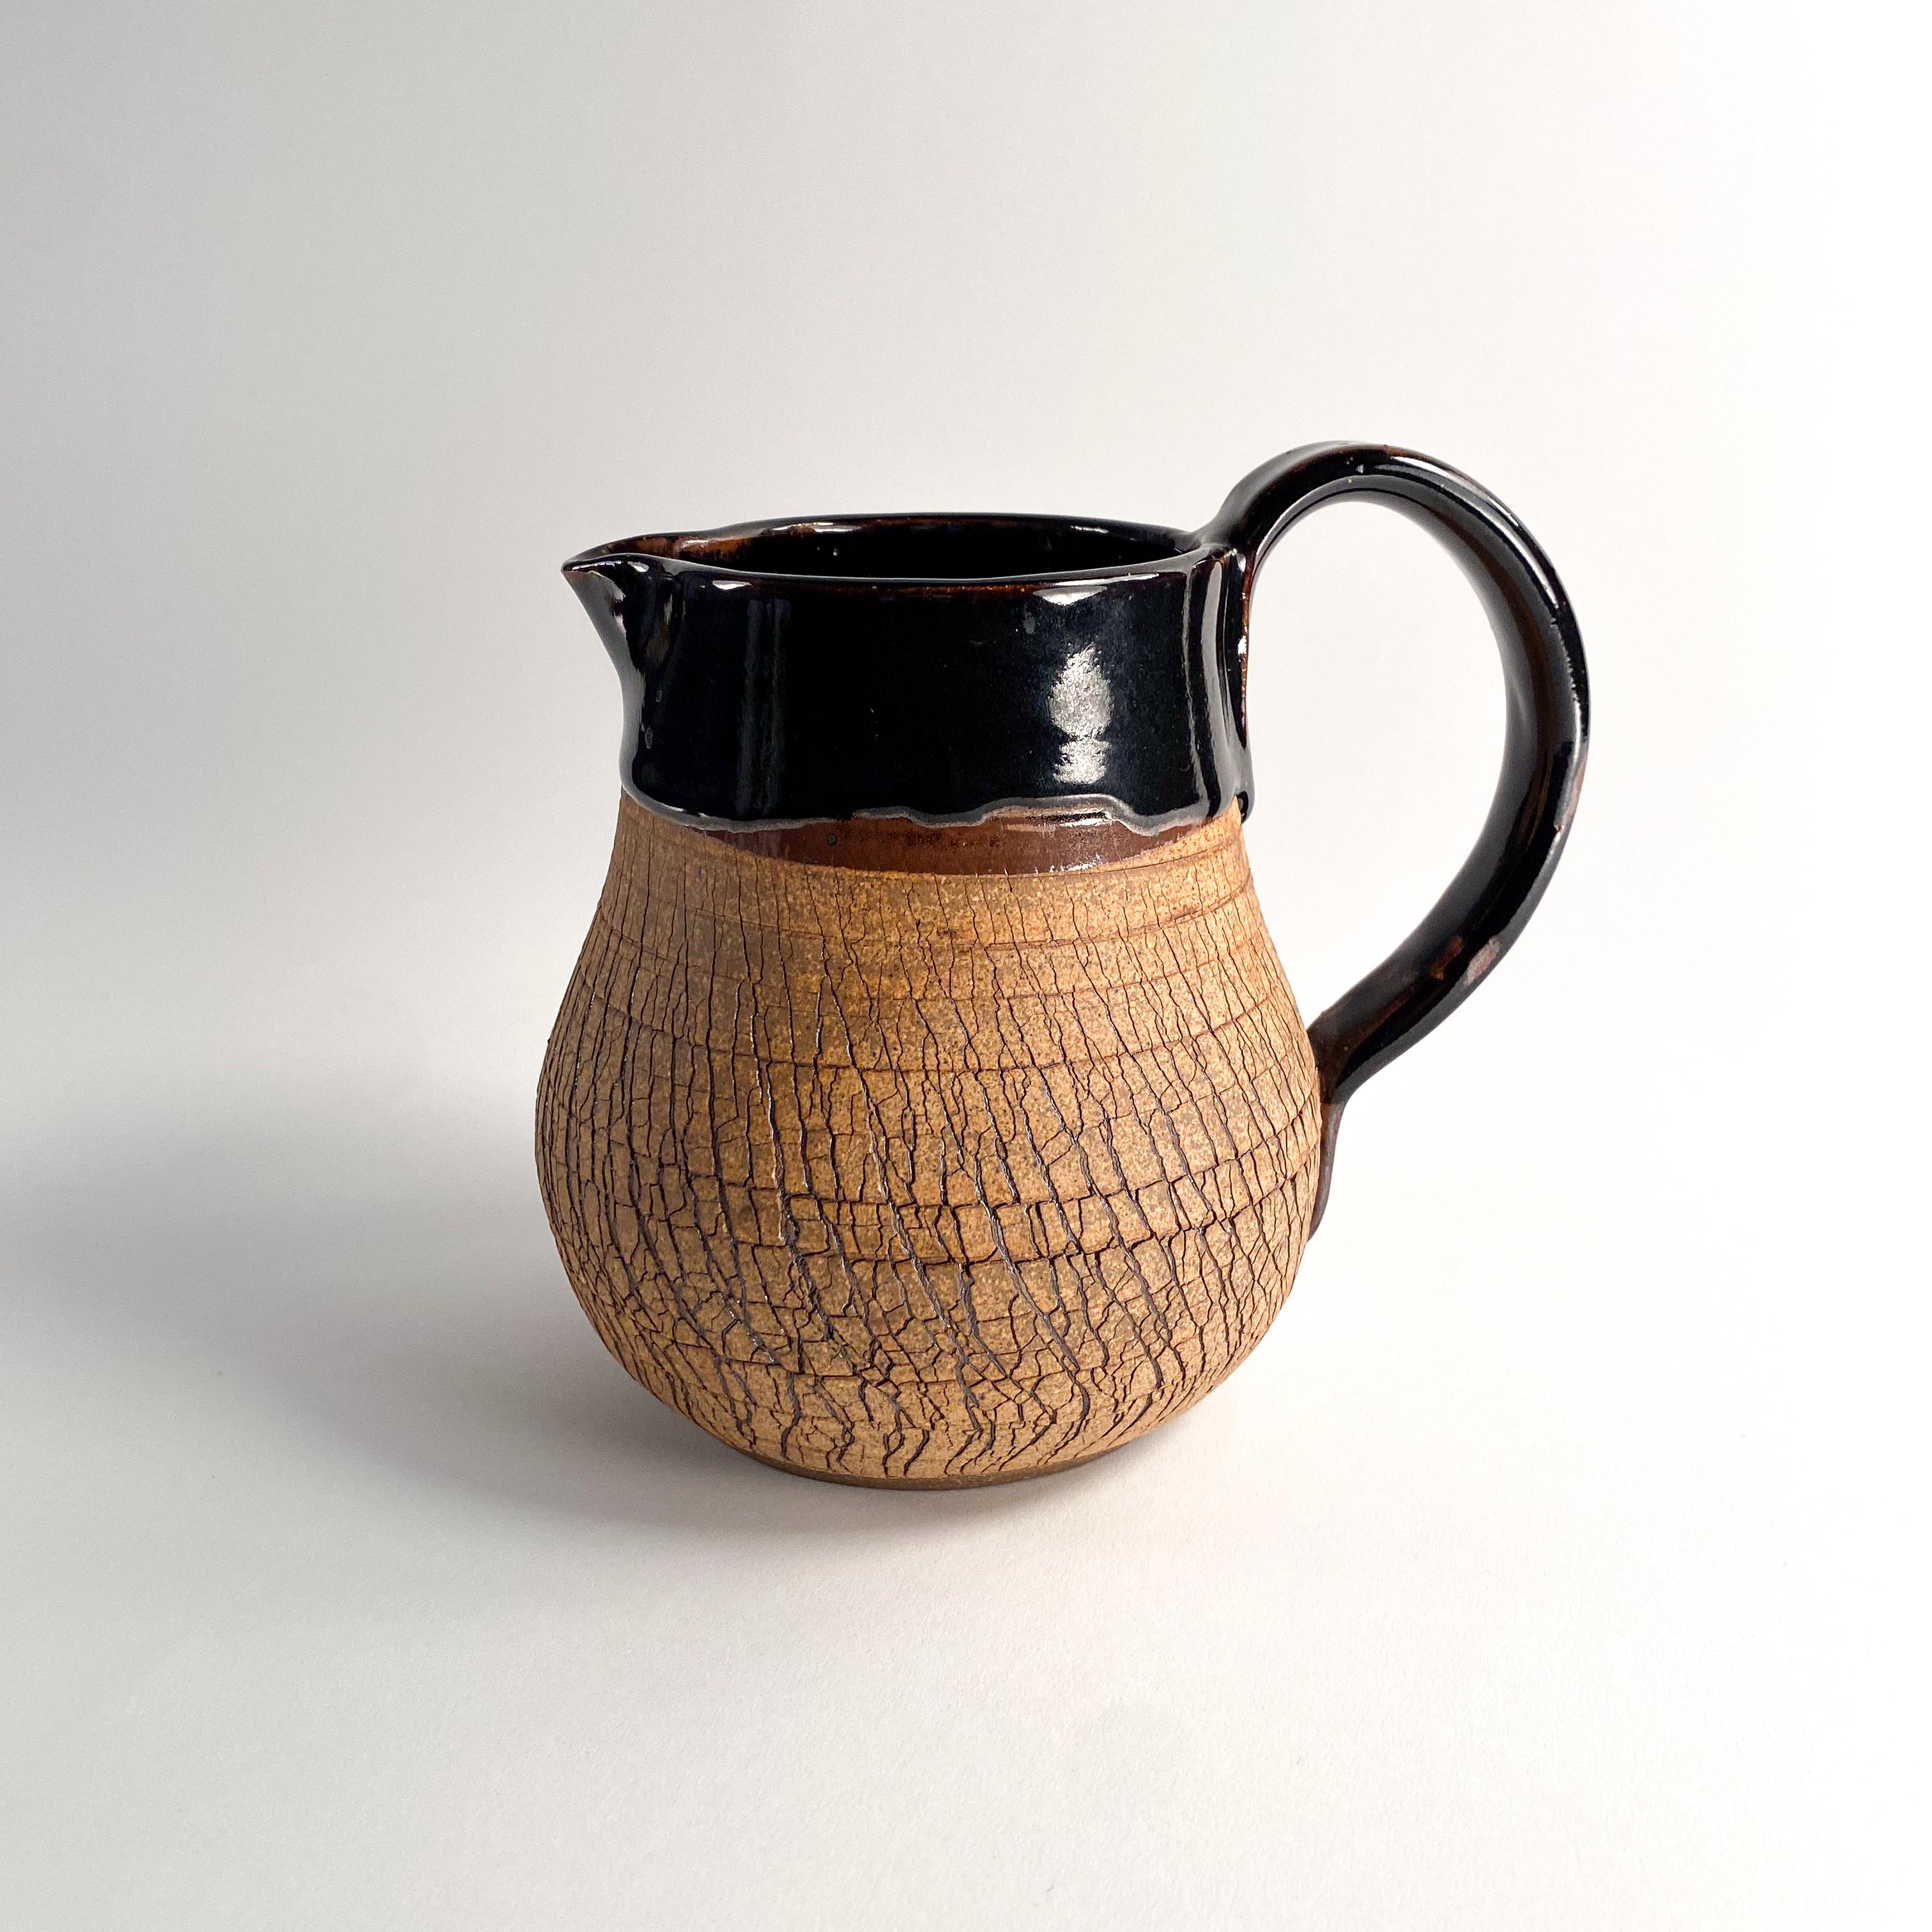 Organic Modern studio pottery cracked glaze pitcher For Sale